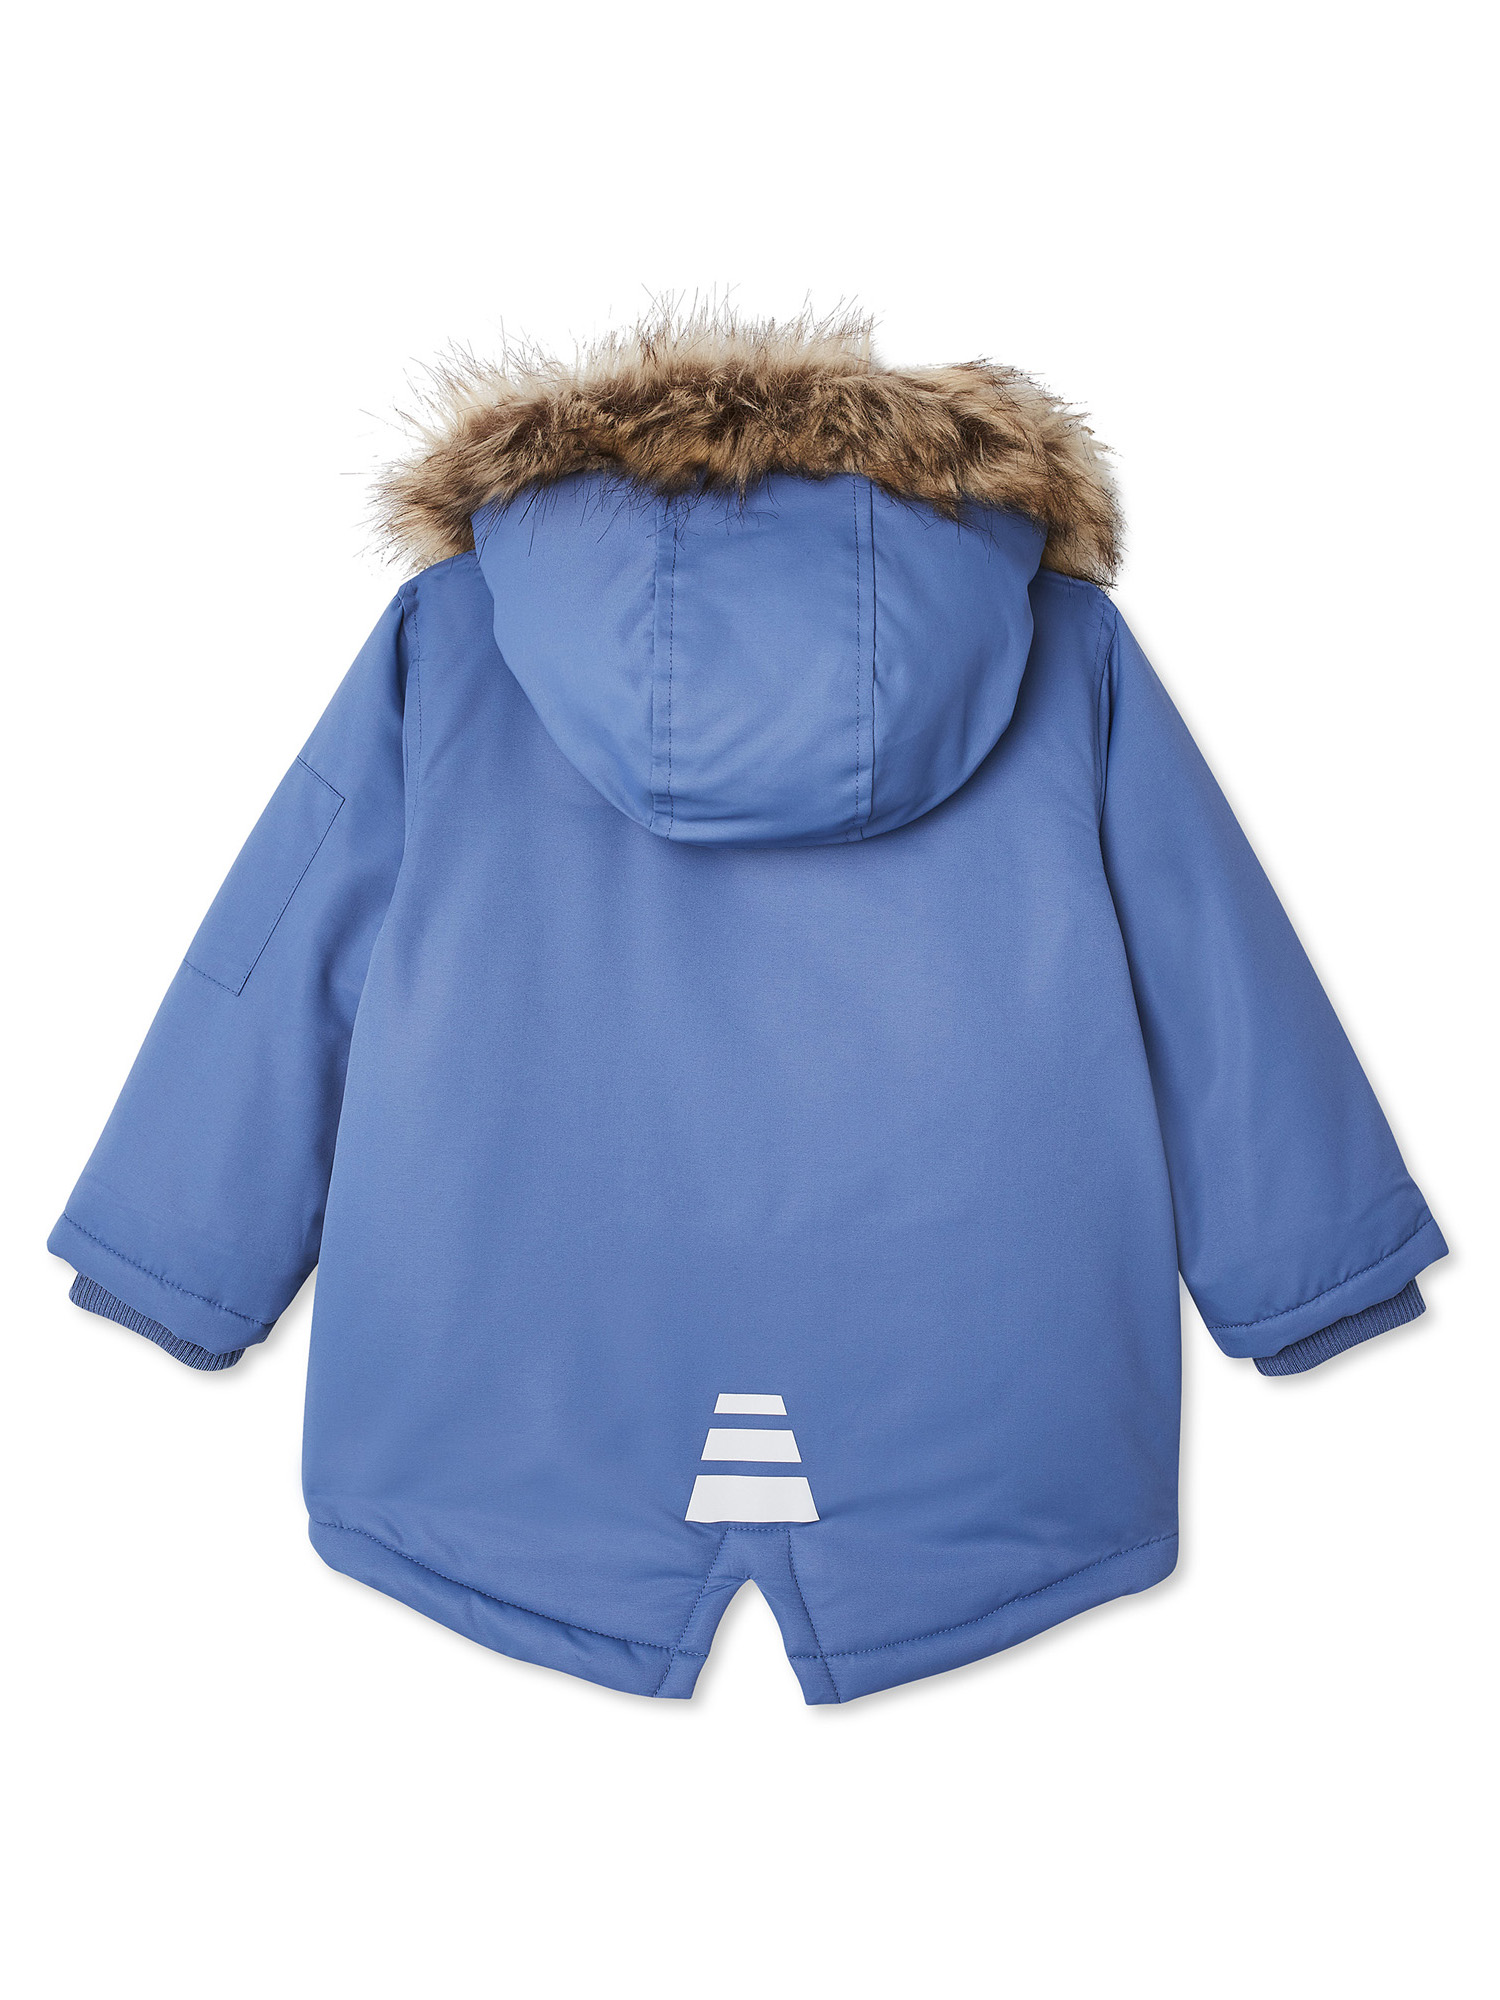 George Toddler Boy Faux Fur Hooded Parka Winter Jacket Coat - image 2 of 2